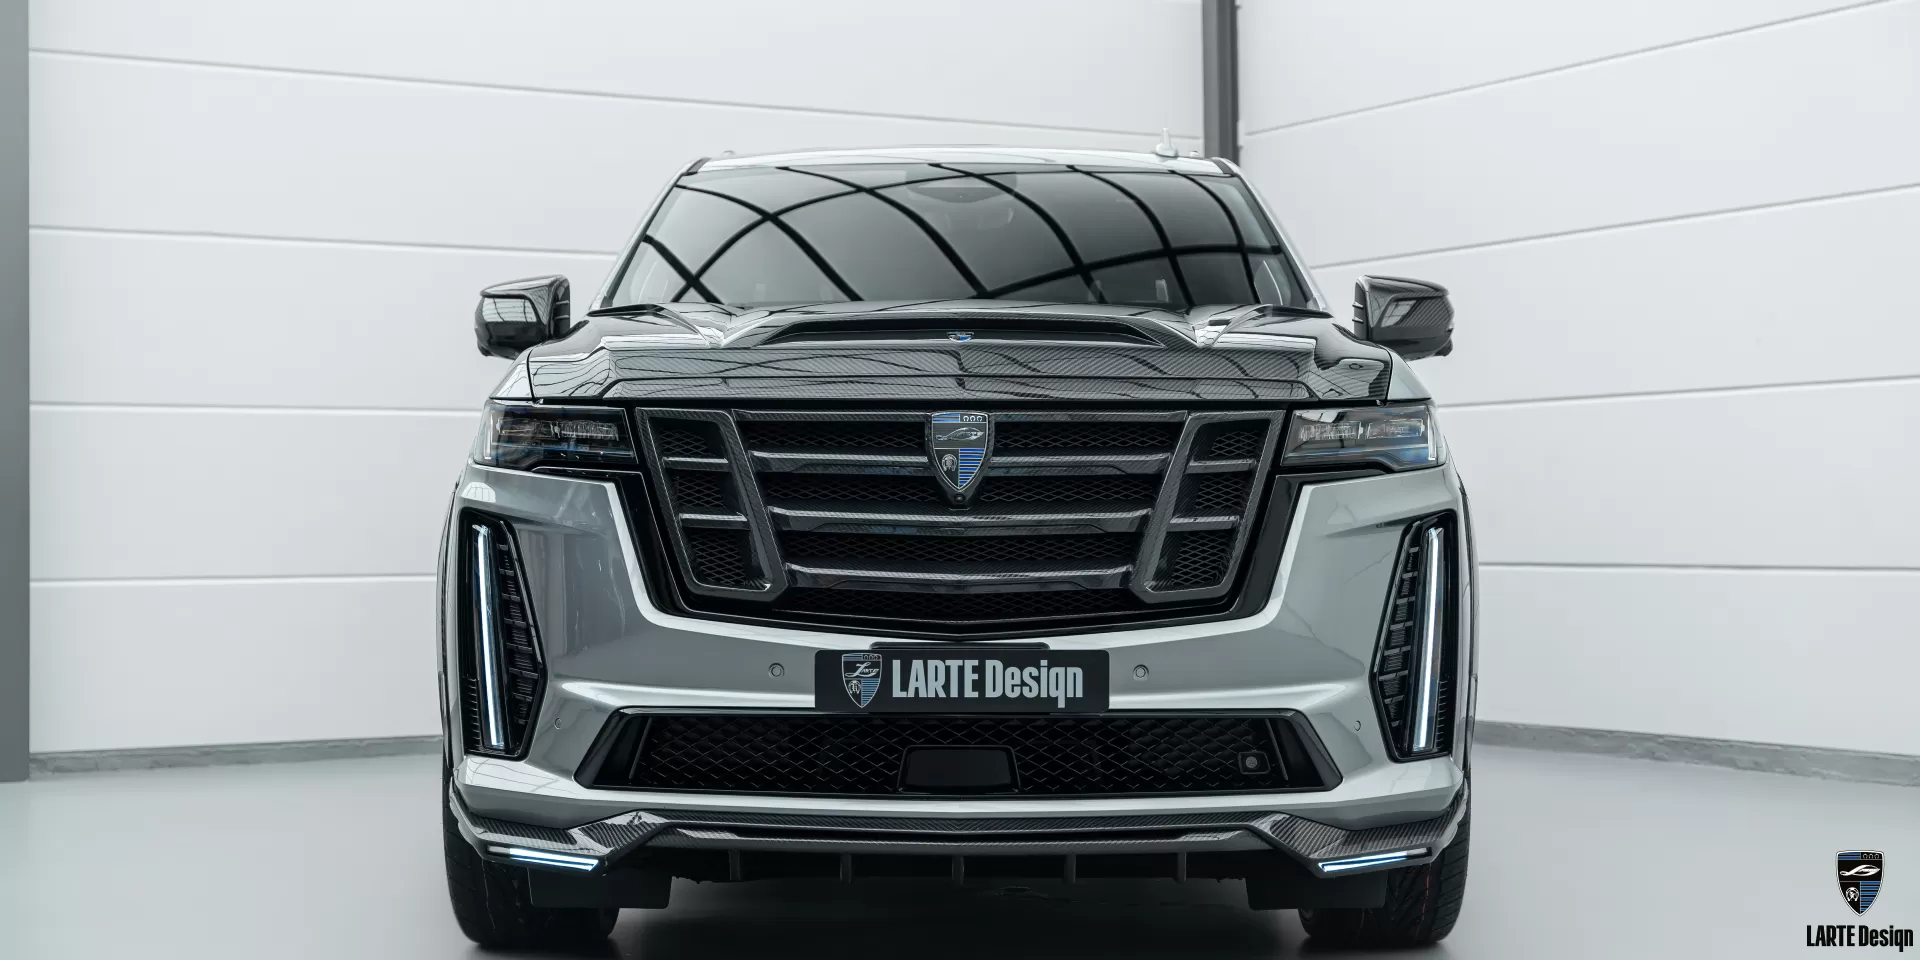 Custom grille trim with LARTE logo in Cadillac Escalade-V ESV body kit 